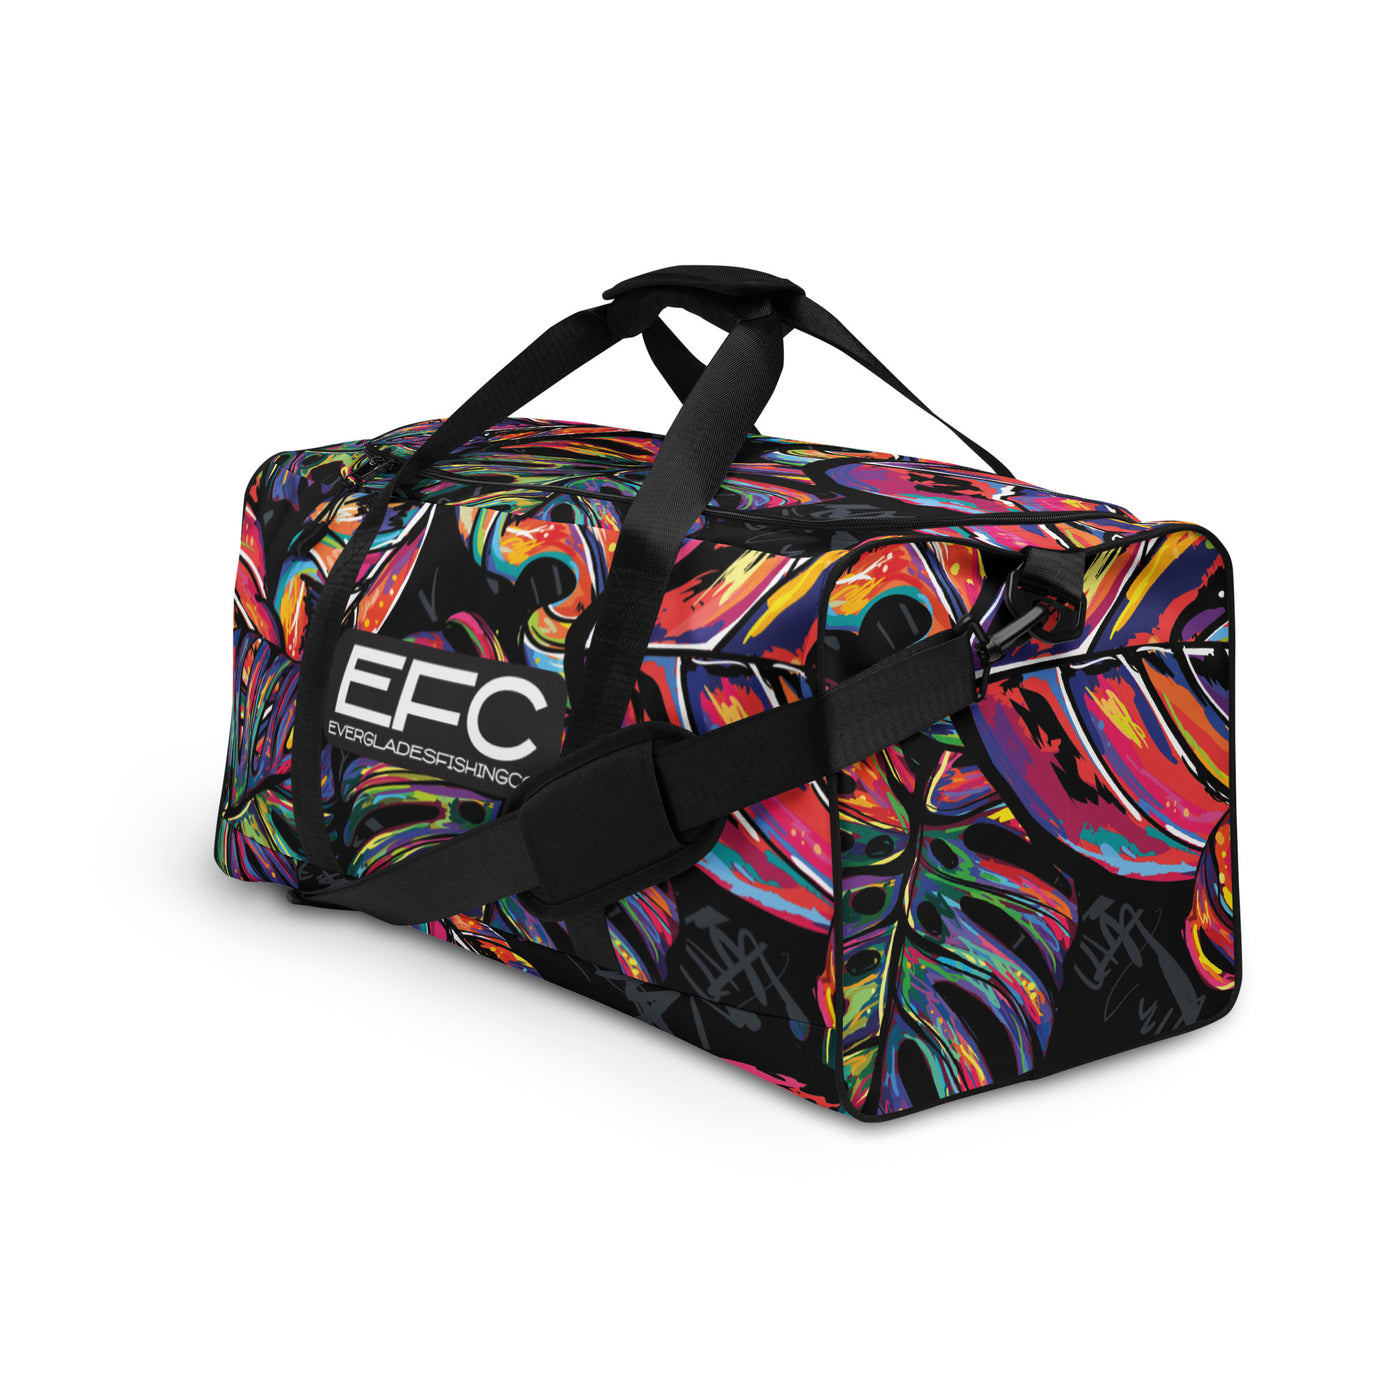 EFC Miami Duffle bag